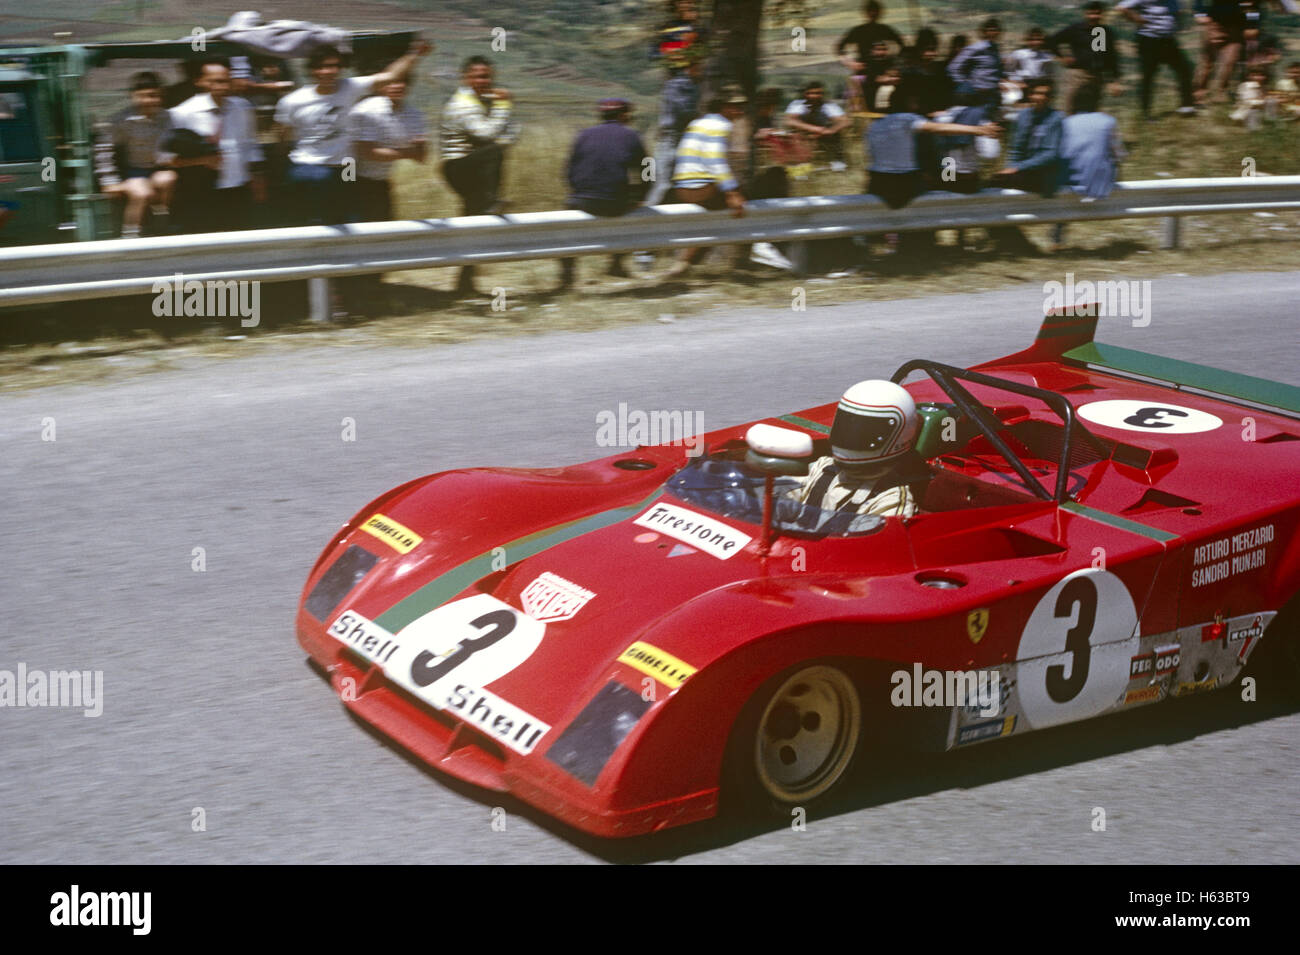 3 Arturo Merzario, Sandro Munari in una Ferrari 312 gara vincitore Targa Florio 21 Maggio 1972 Foto Stock